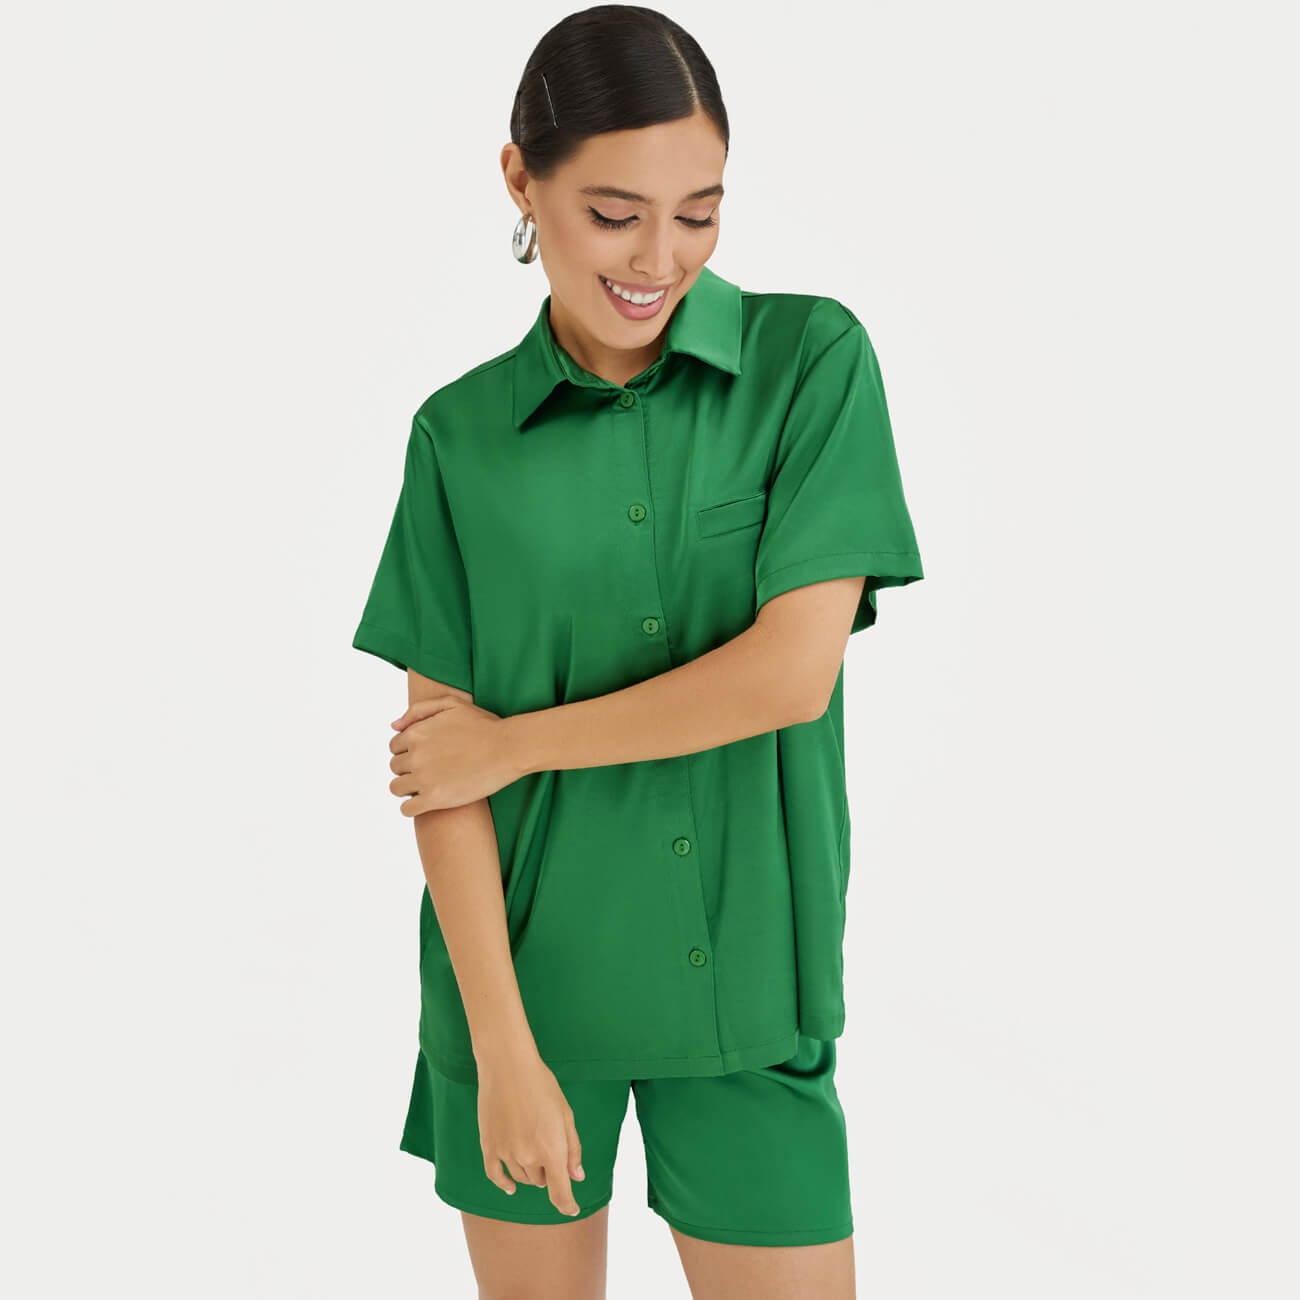 Рубашка женская, р. XL, с коротким рукавом, полиэстер/эластан, зеленая, Madeline рубашка женская р l удлиненная с длинным рукавом полиэстер эластан зеленая madeline